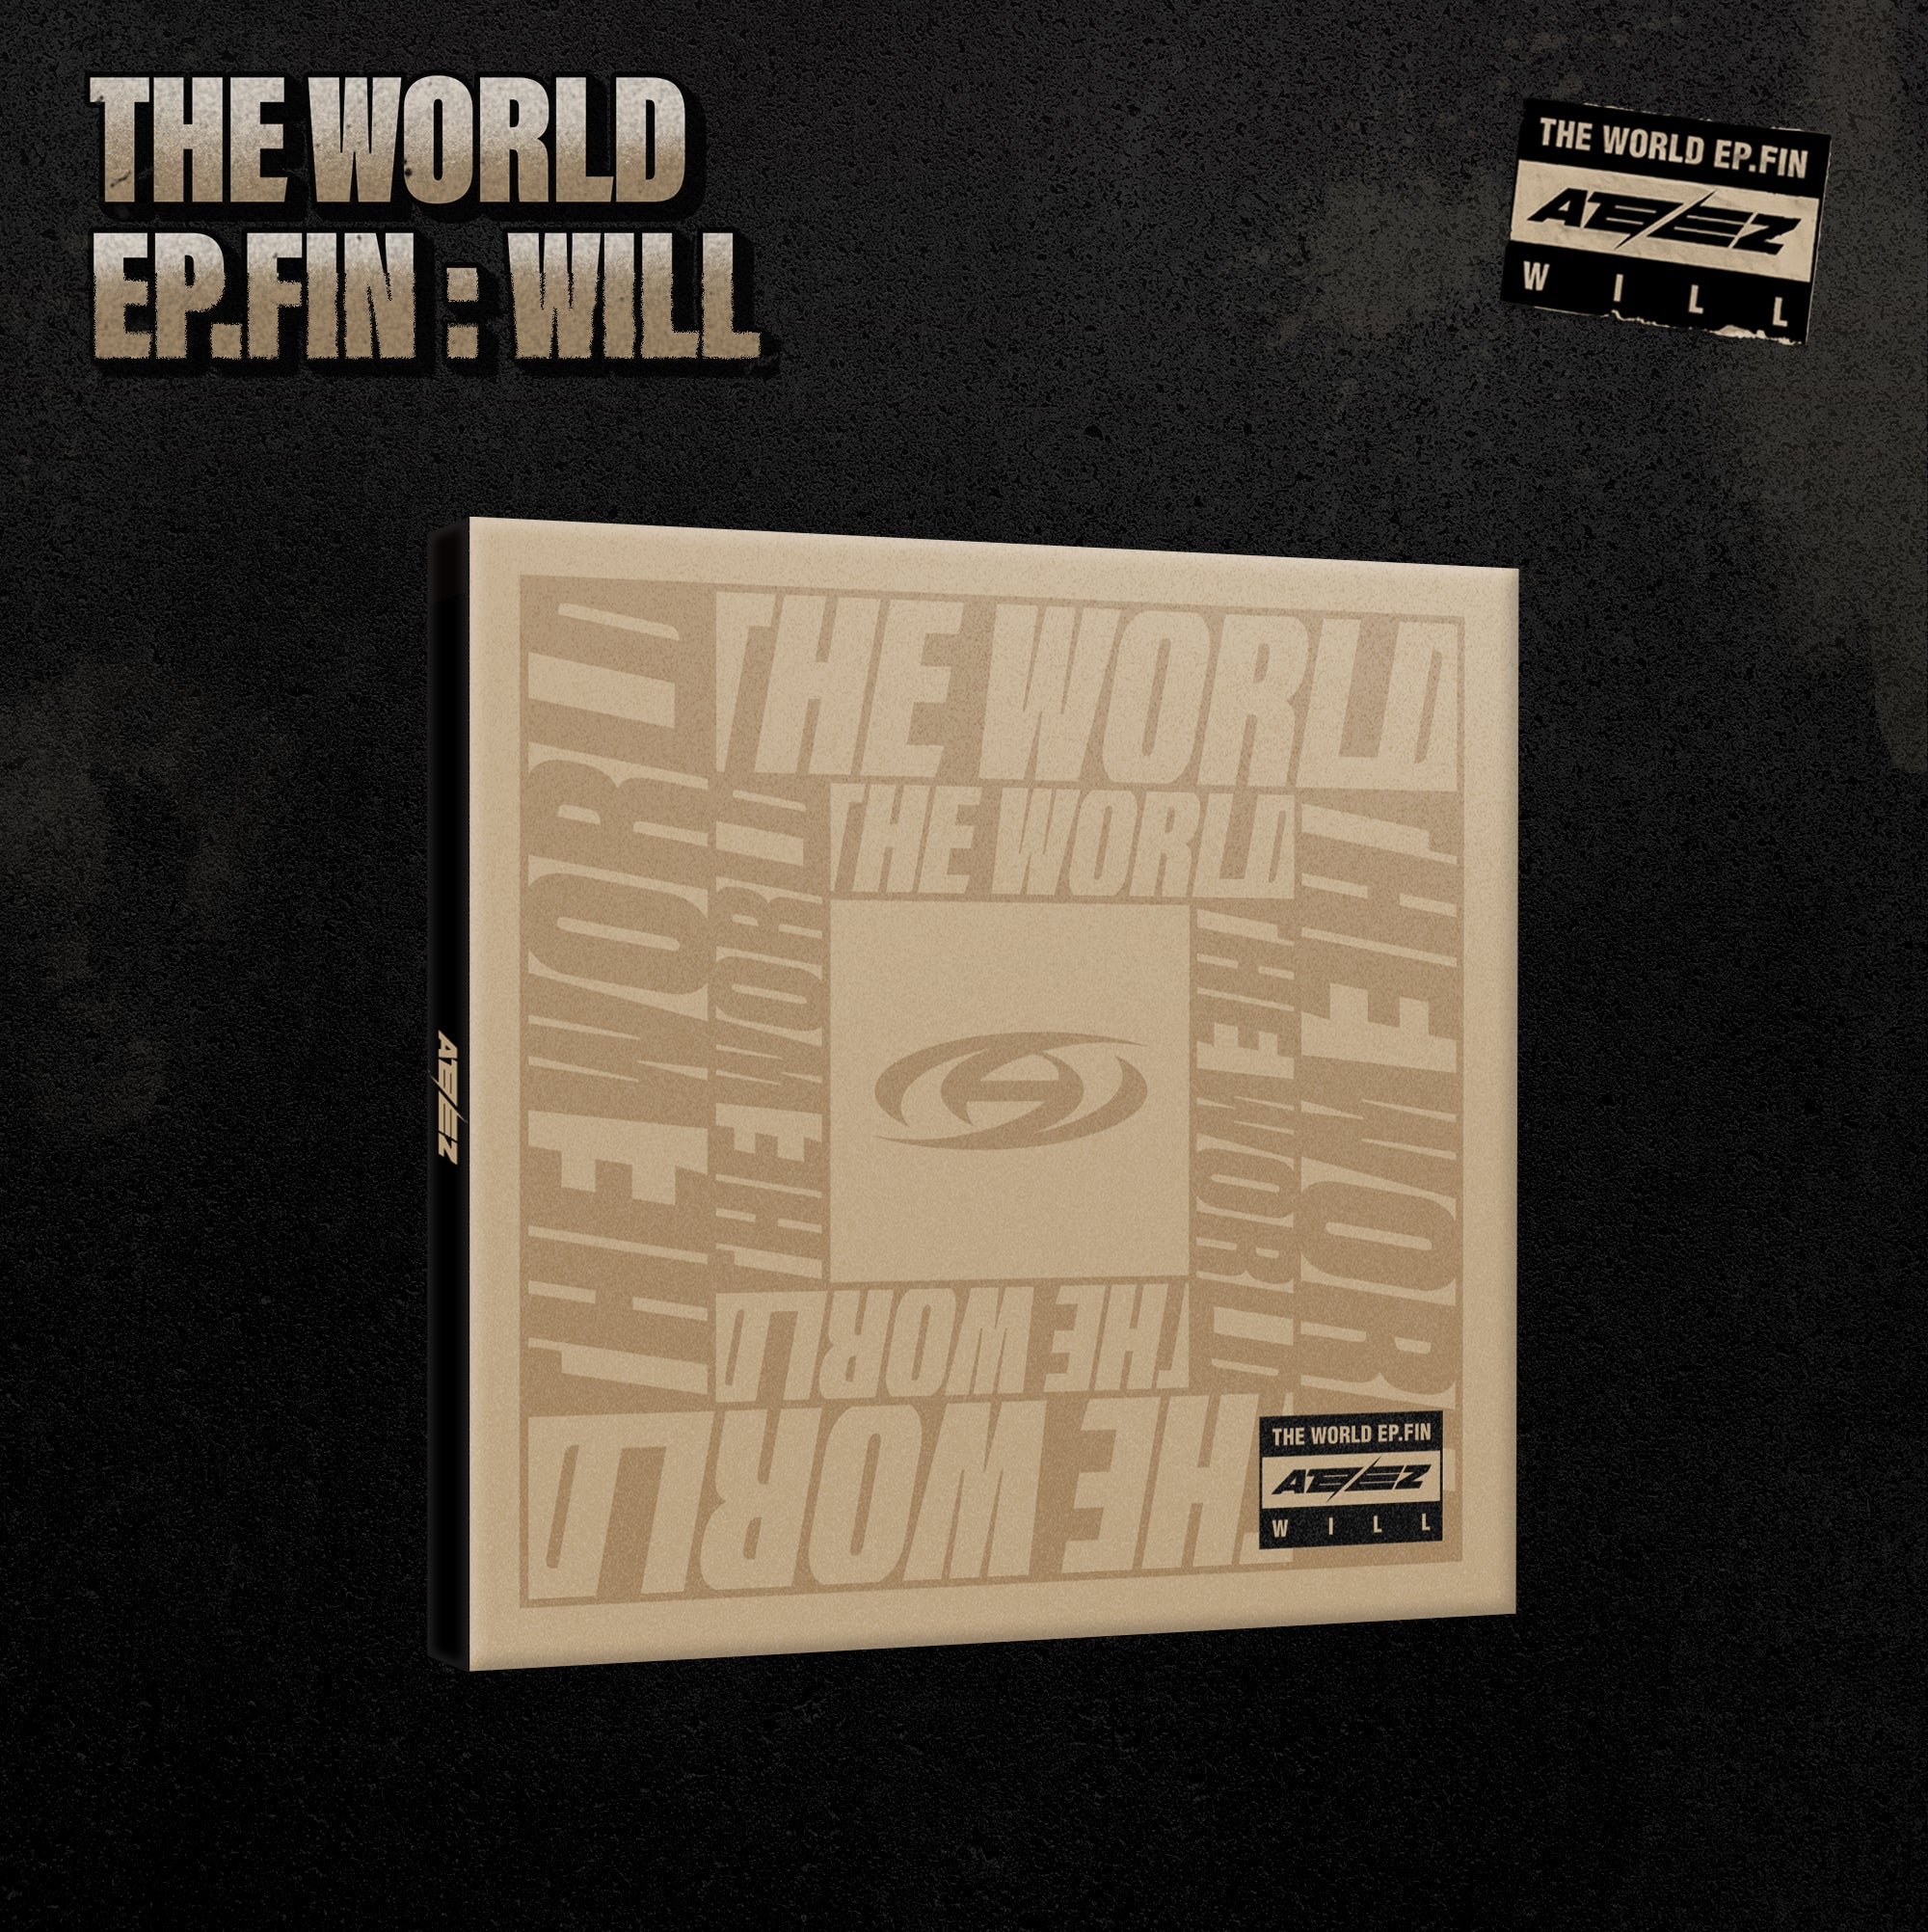 ATEEZ - Album: THE WORLD EP.1 MOVEMENT (Digipack Ver.)